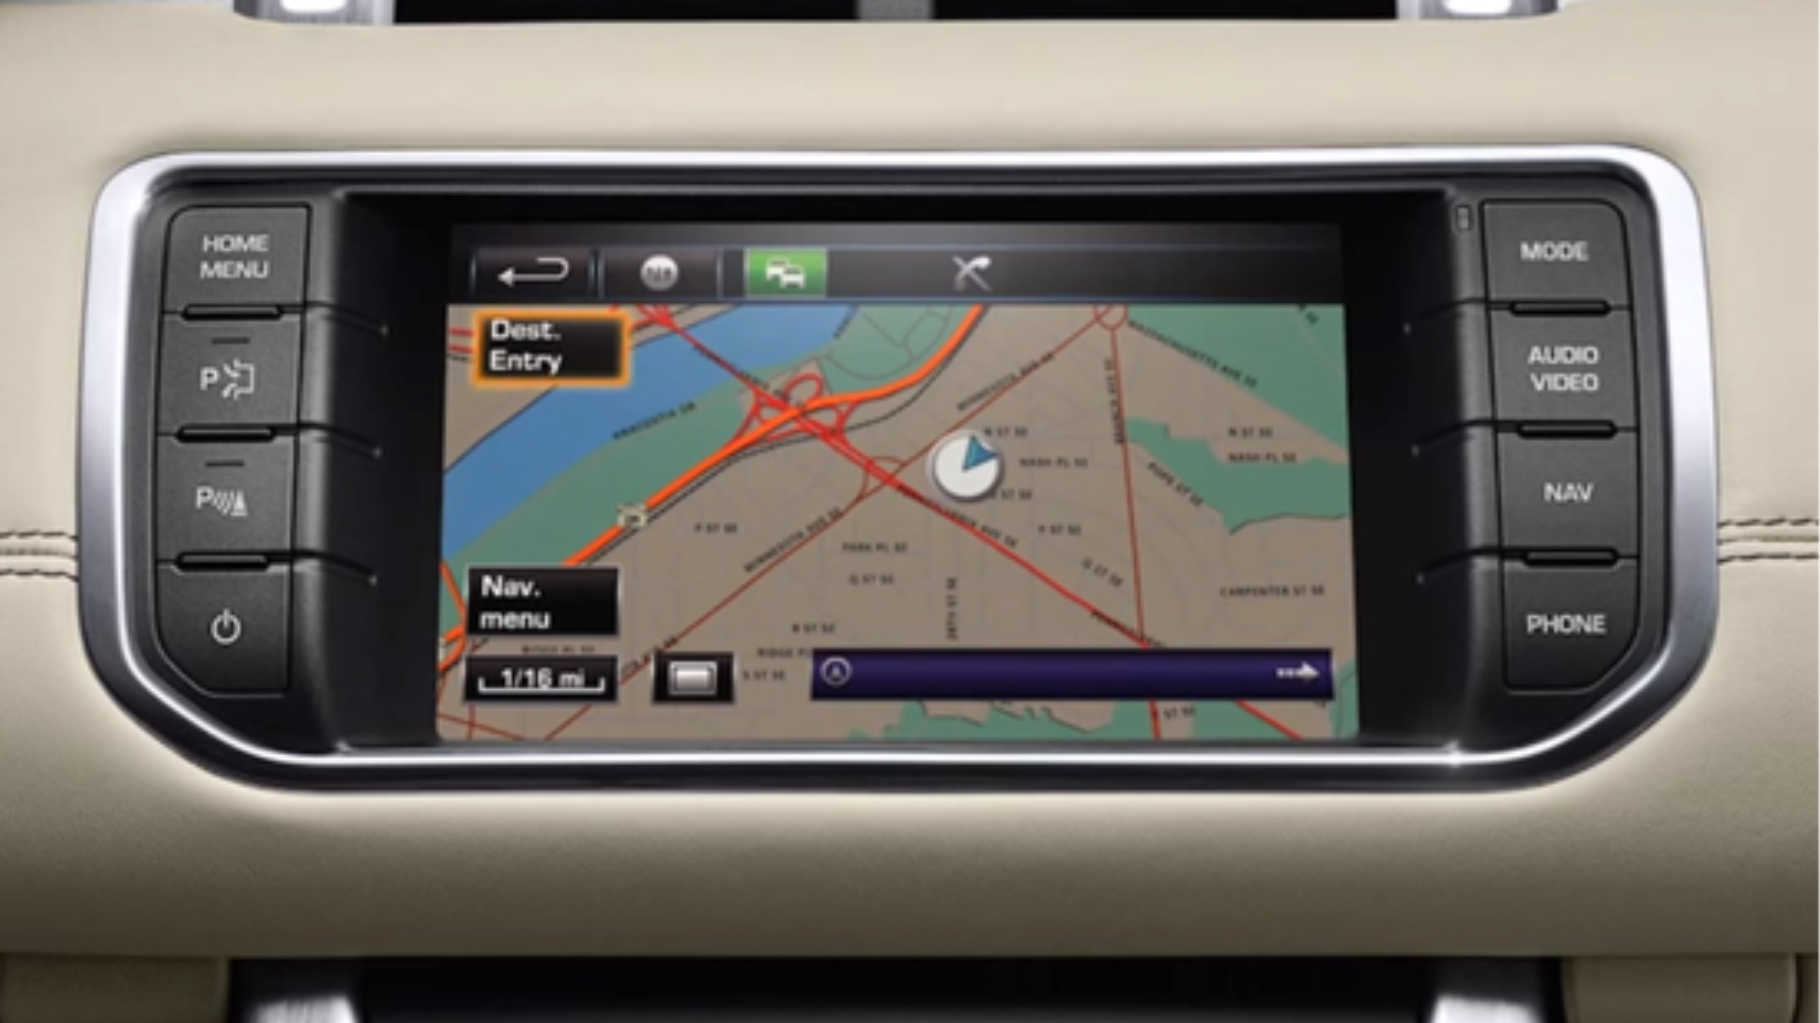 Range Rover Evoque Navigation System